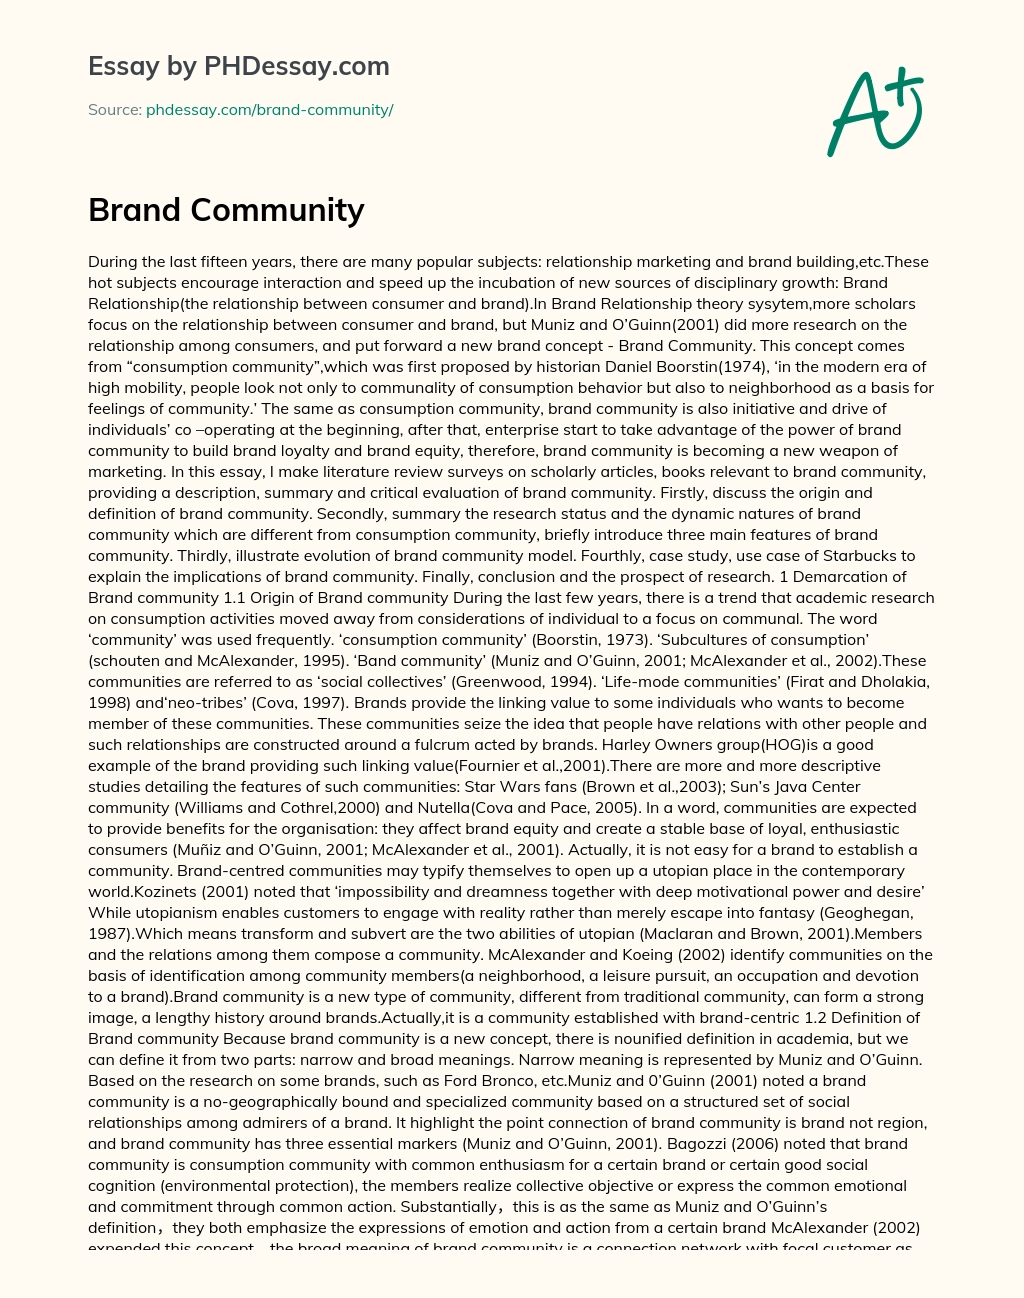 Brand Community essay